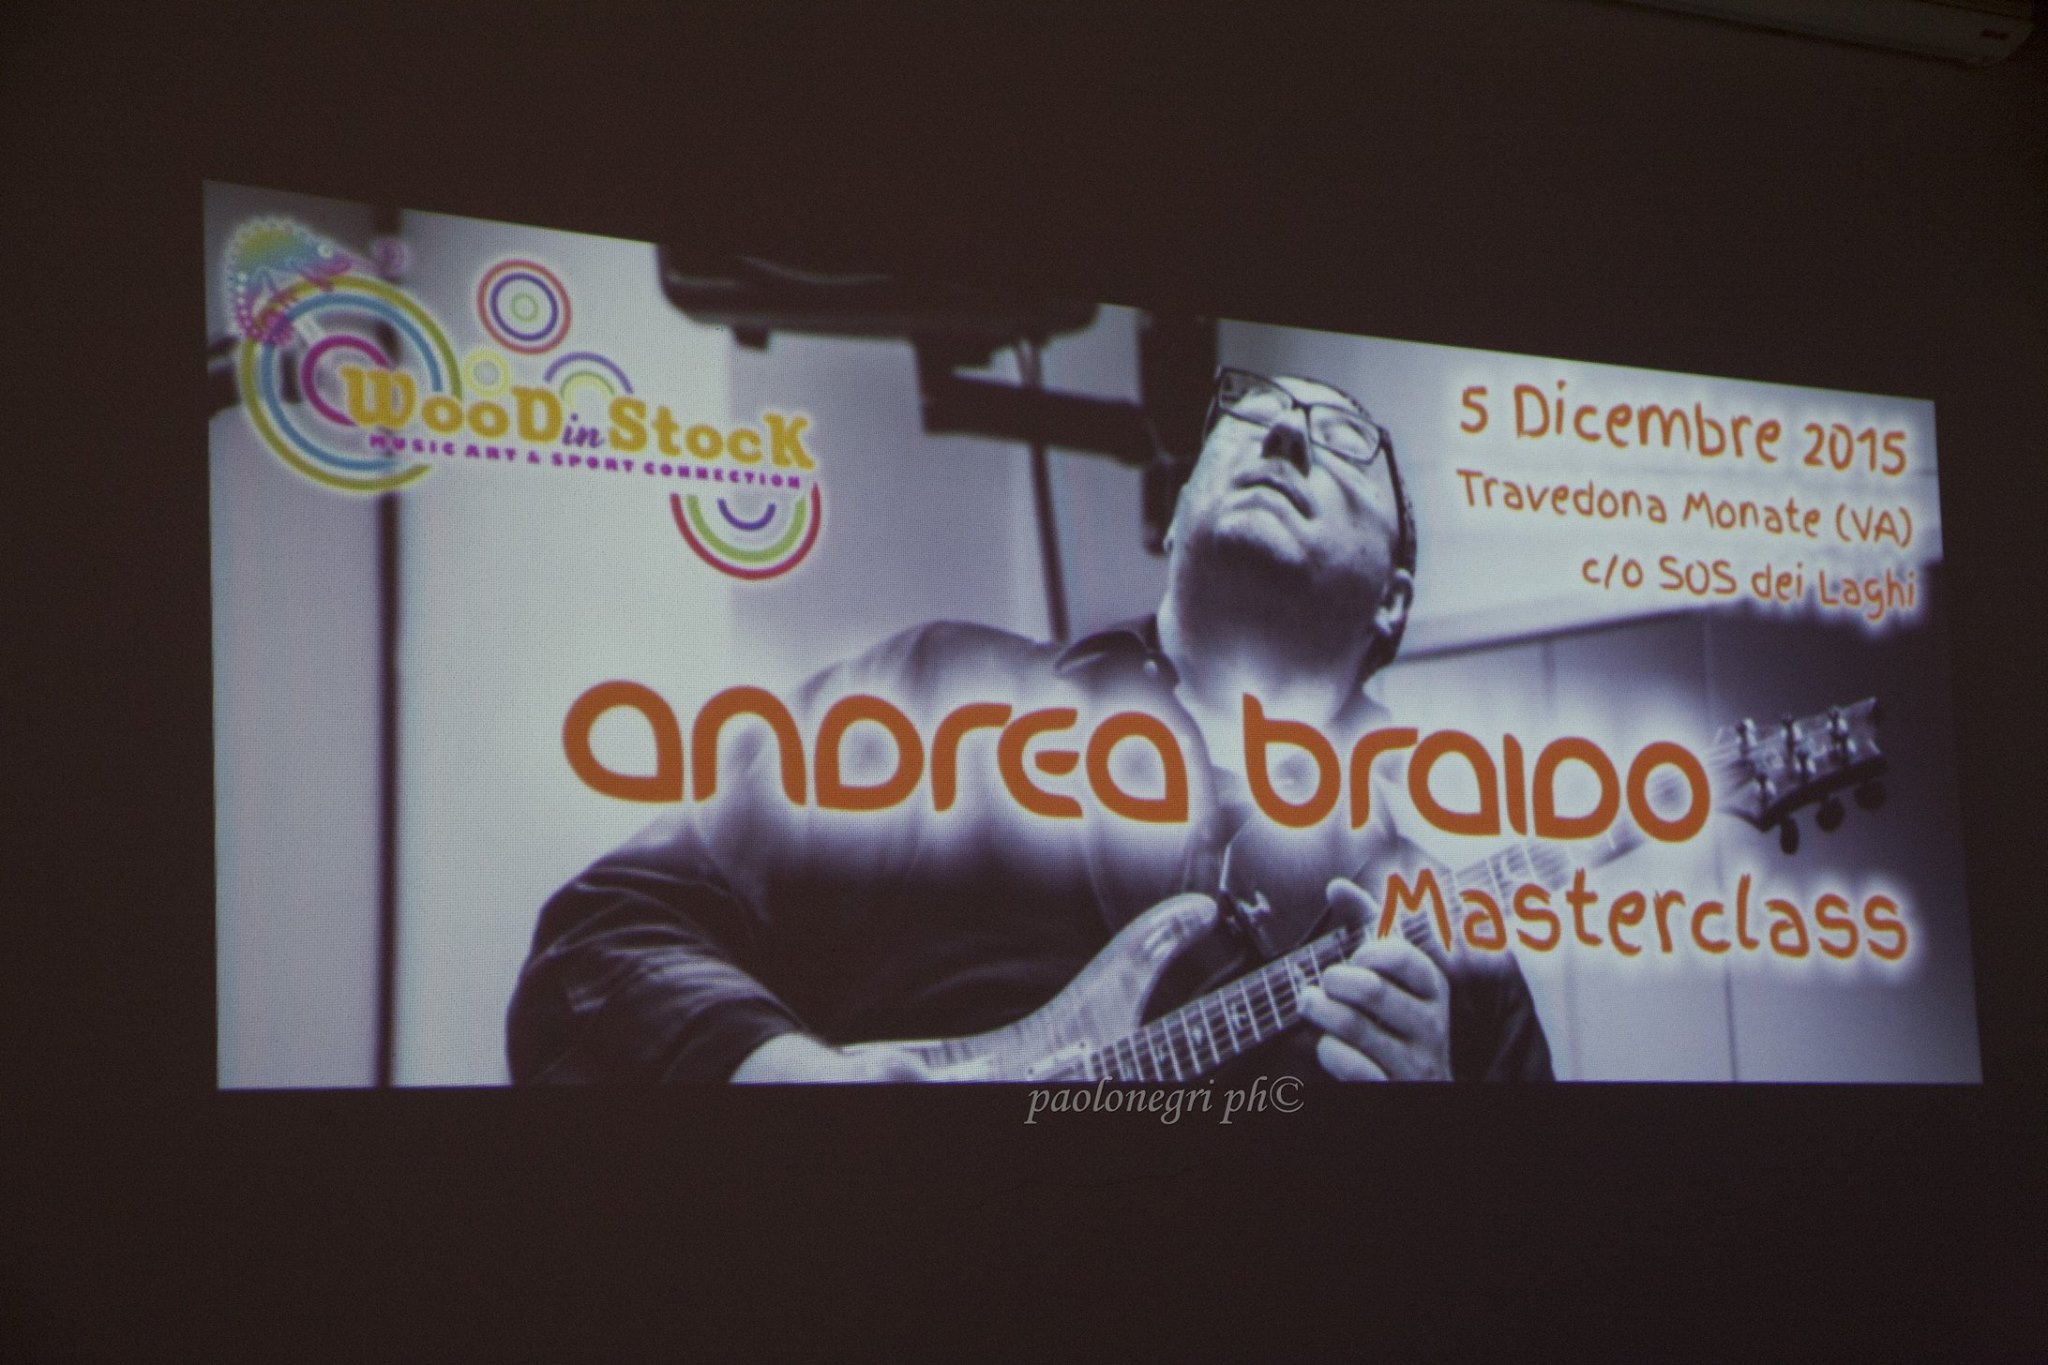 2015 andrea braido masterclass per woodinstock 1.jpg